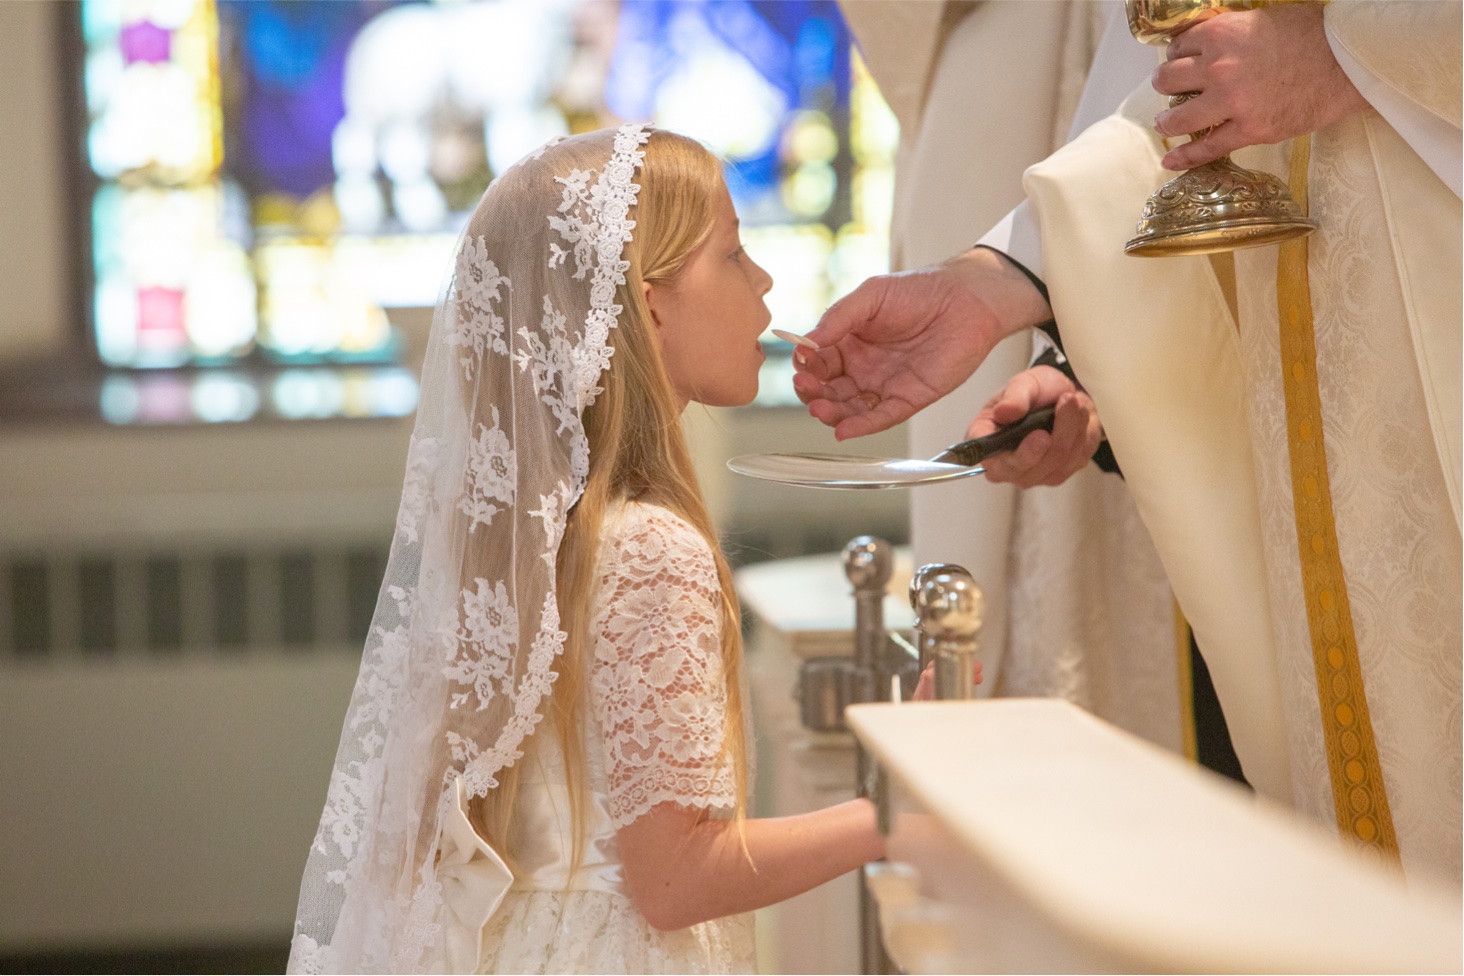 First Communion & Confirmation Photos! — CORPUS CHRISTI